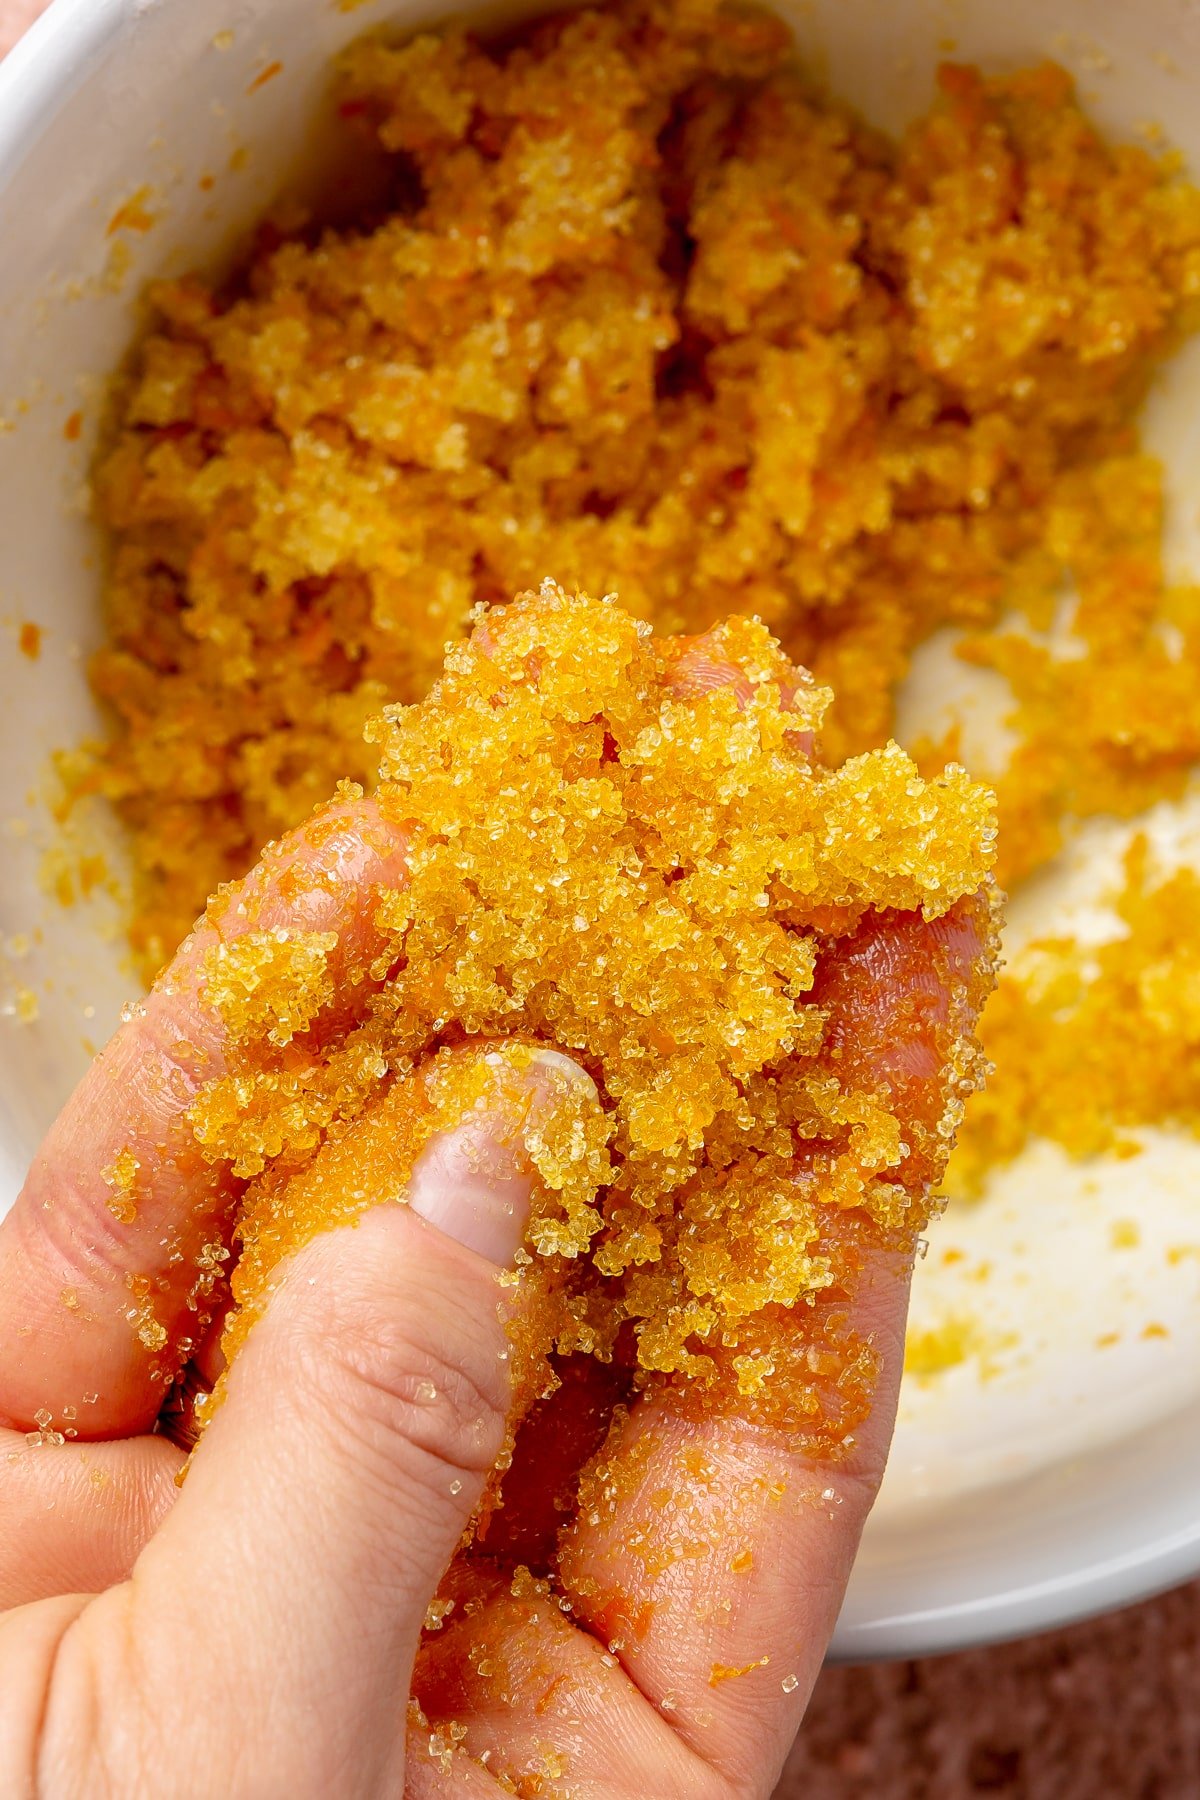 A hand is shown scooping ups bit of an orange sugar mixture.